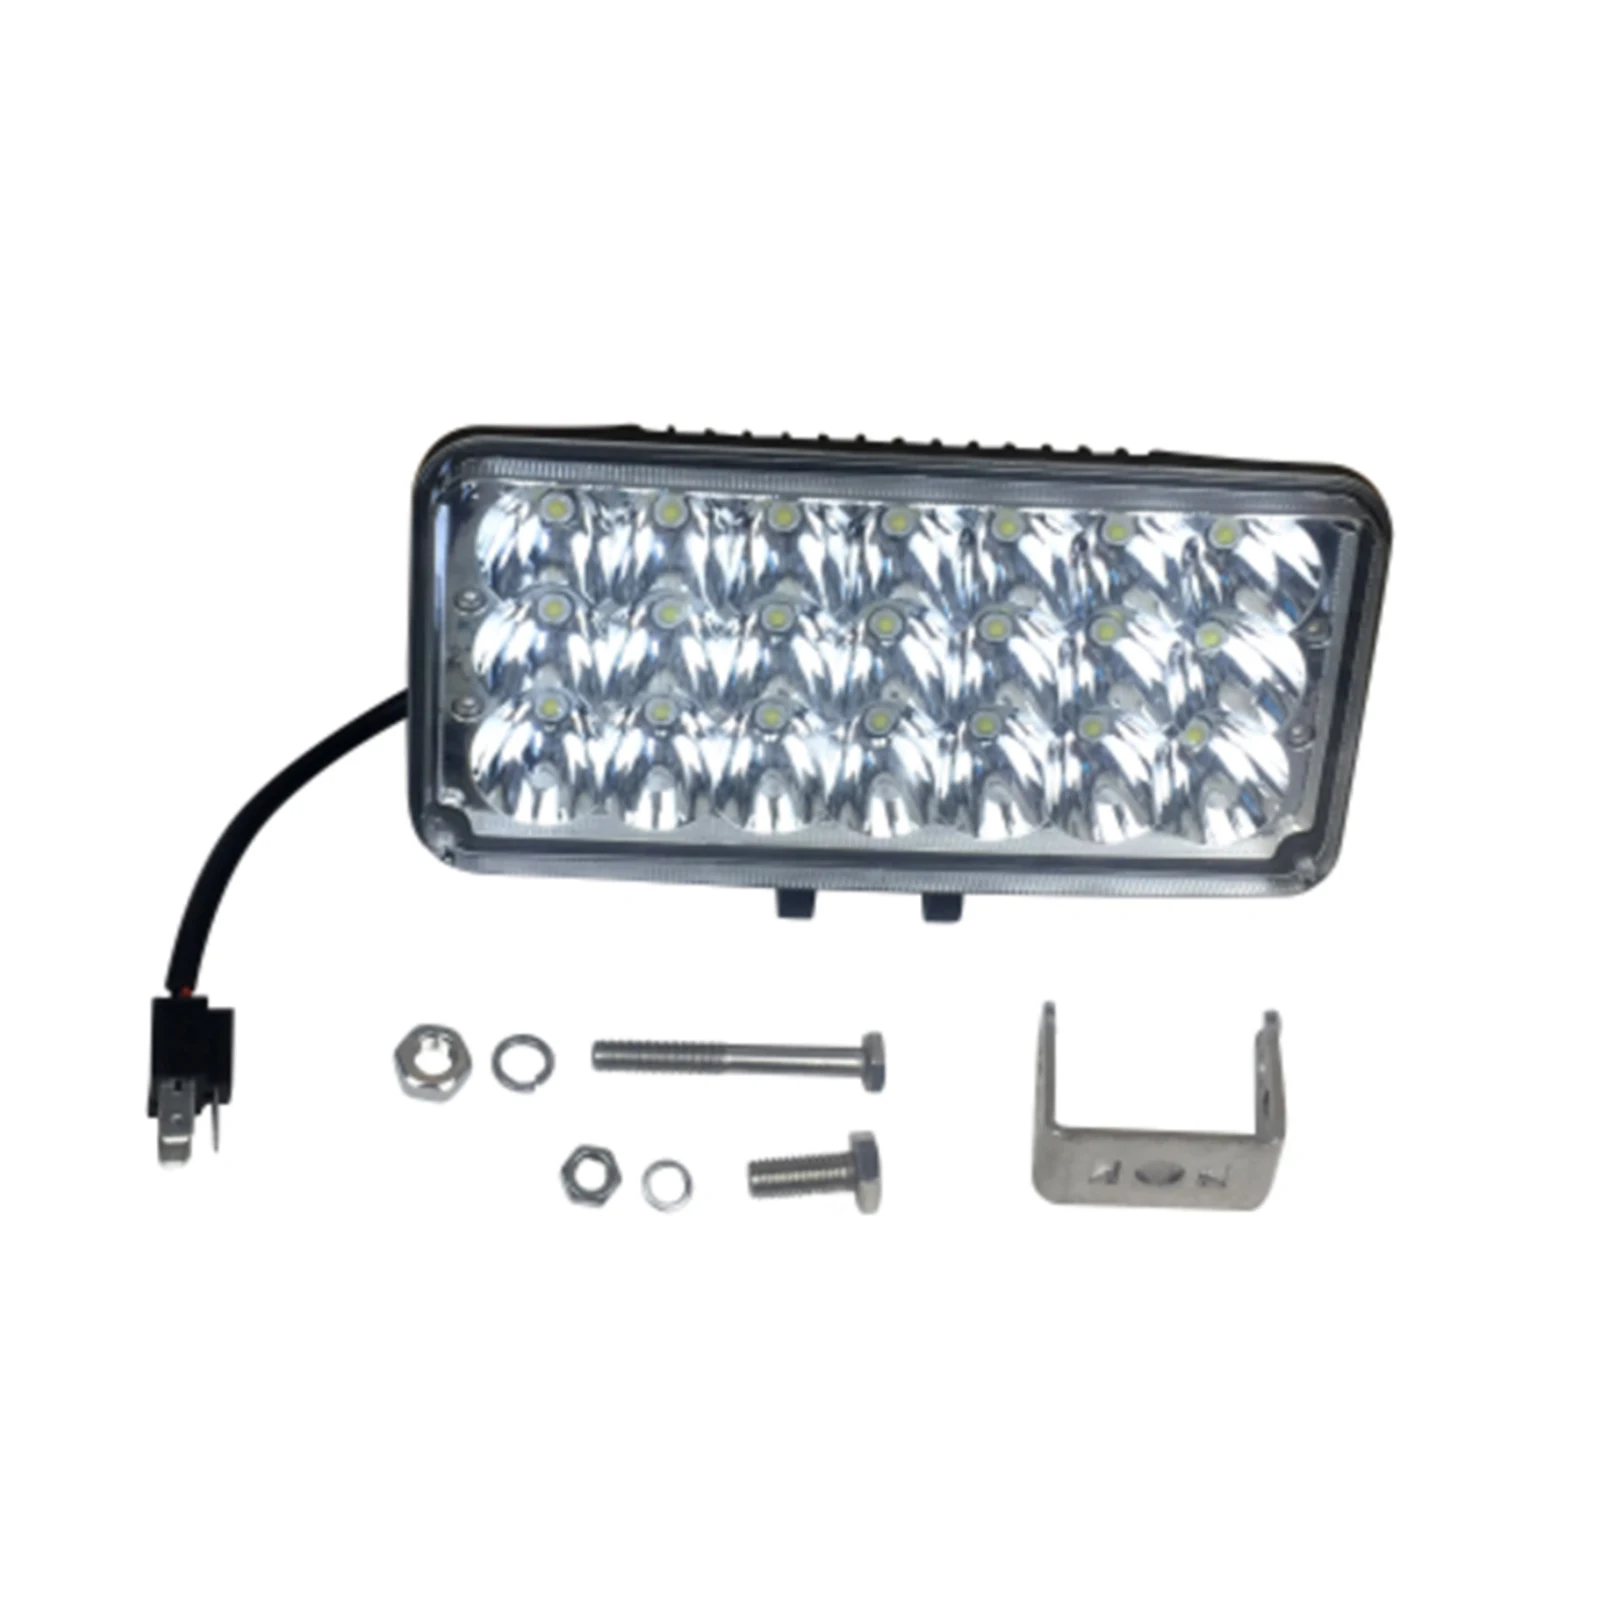 63W LED work Light for Trucks lightforce hid driving lights for Tractors Forklifts tail light 9 inch 12V 24V